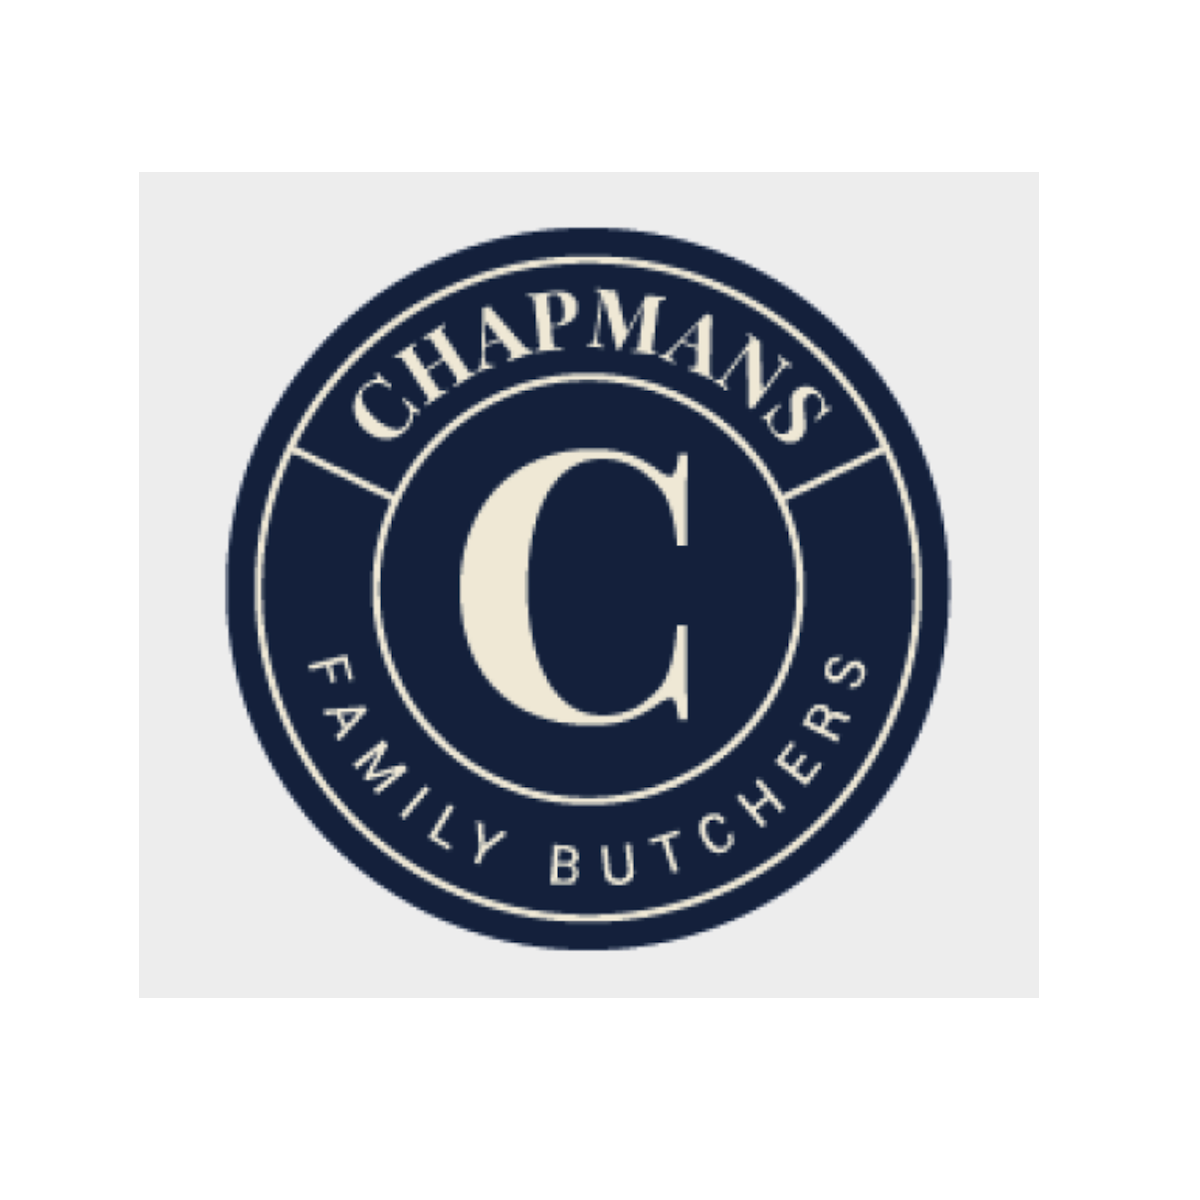 Chapmans Butchers brand logo